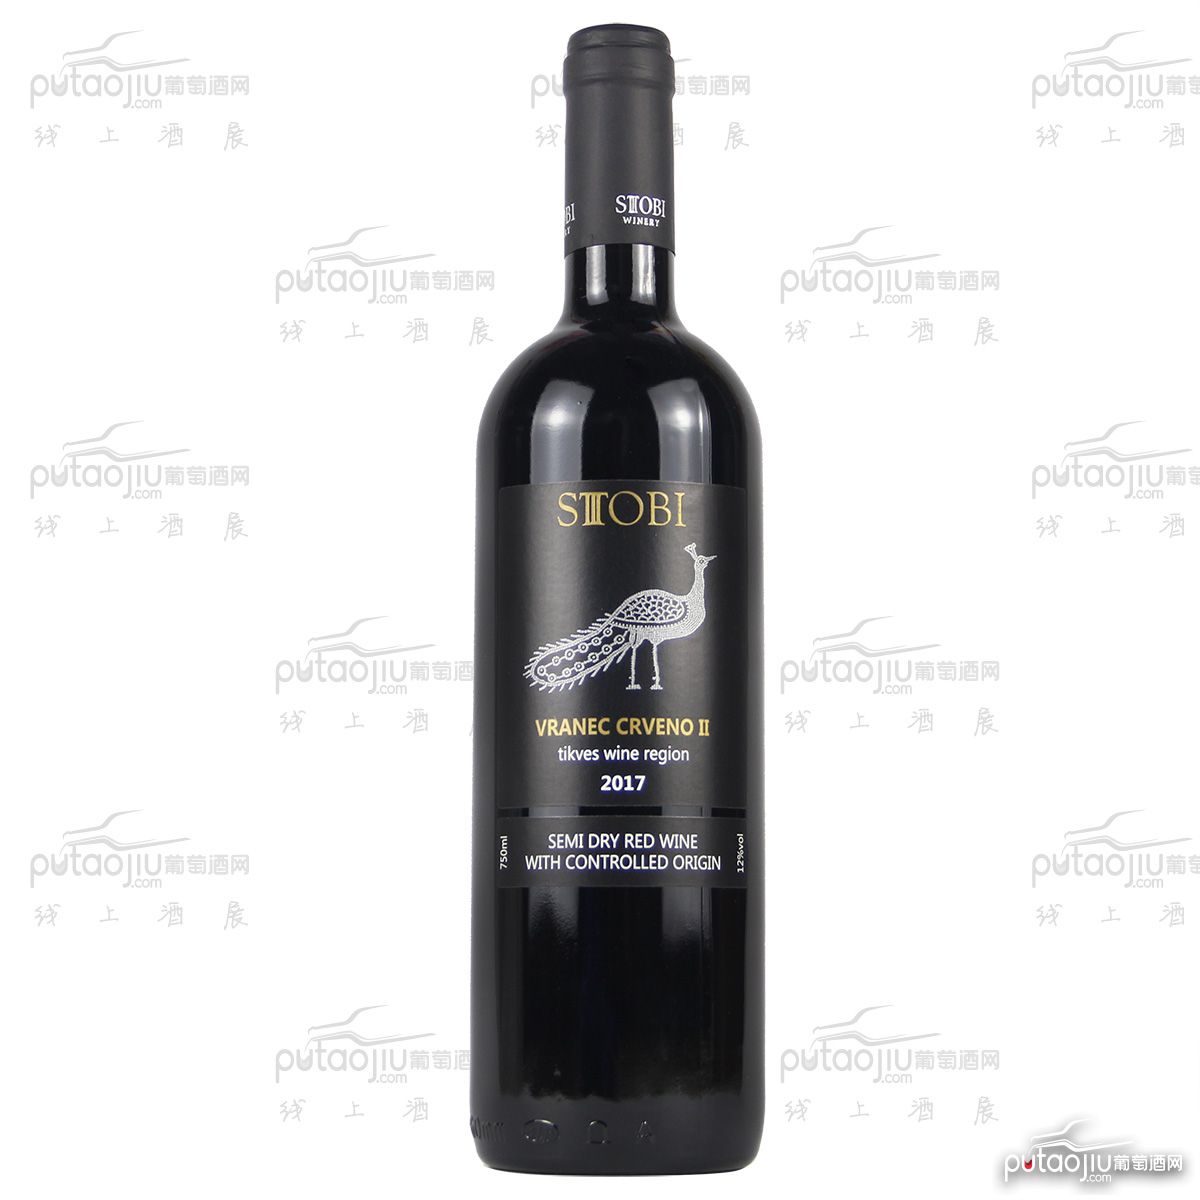 STOBI斯多比酒庄(VRANEC CRVENOII)卡威罗 A级混酿半干红葡萄酒小众国家原装进口北马其顿红酒